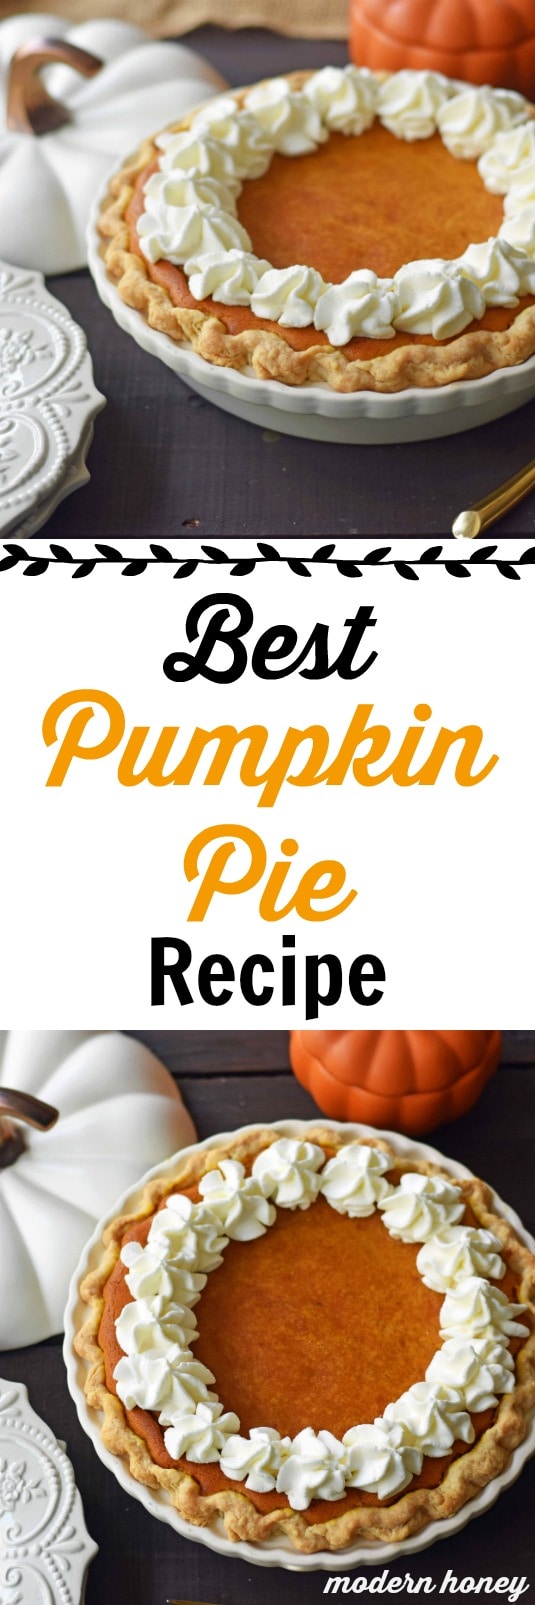 The Best Pumpkin Pie Recipe - Modern Honey